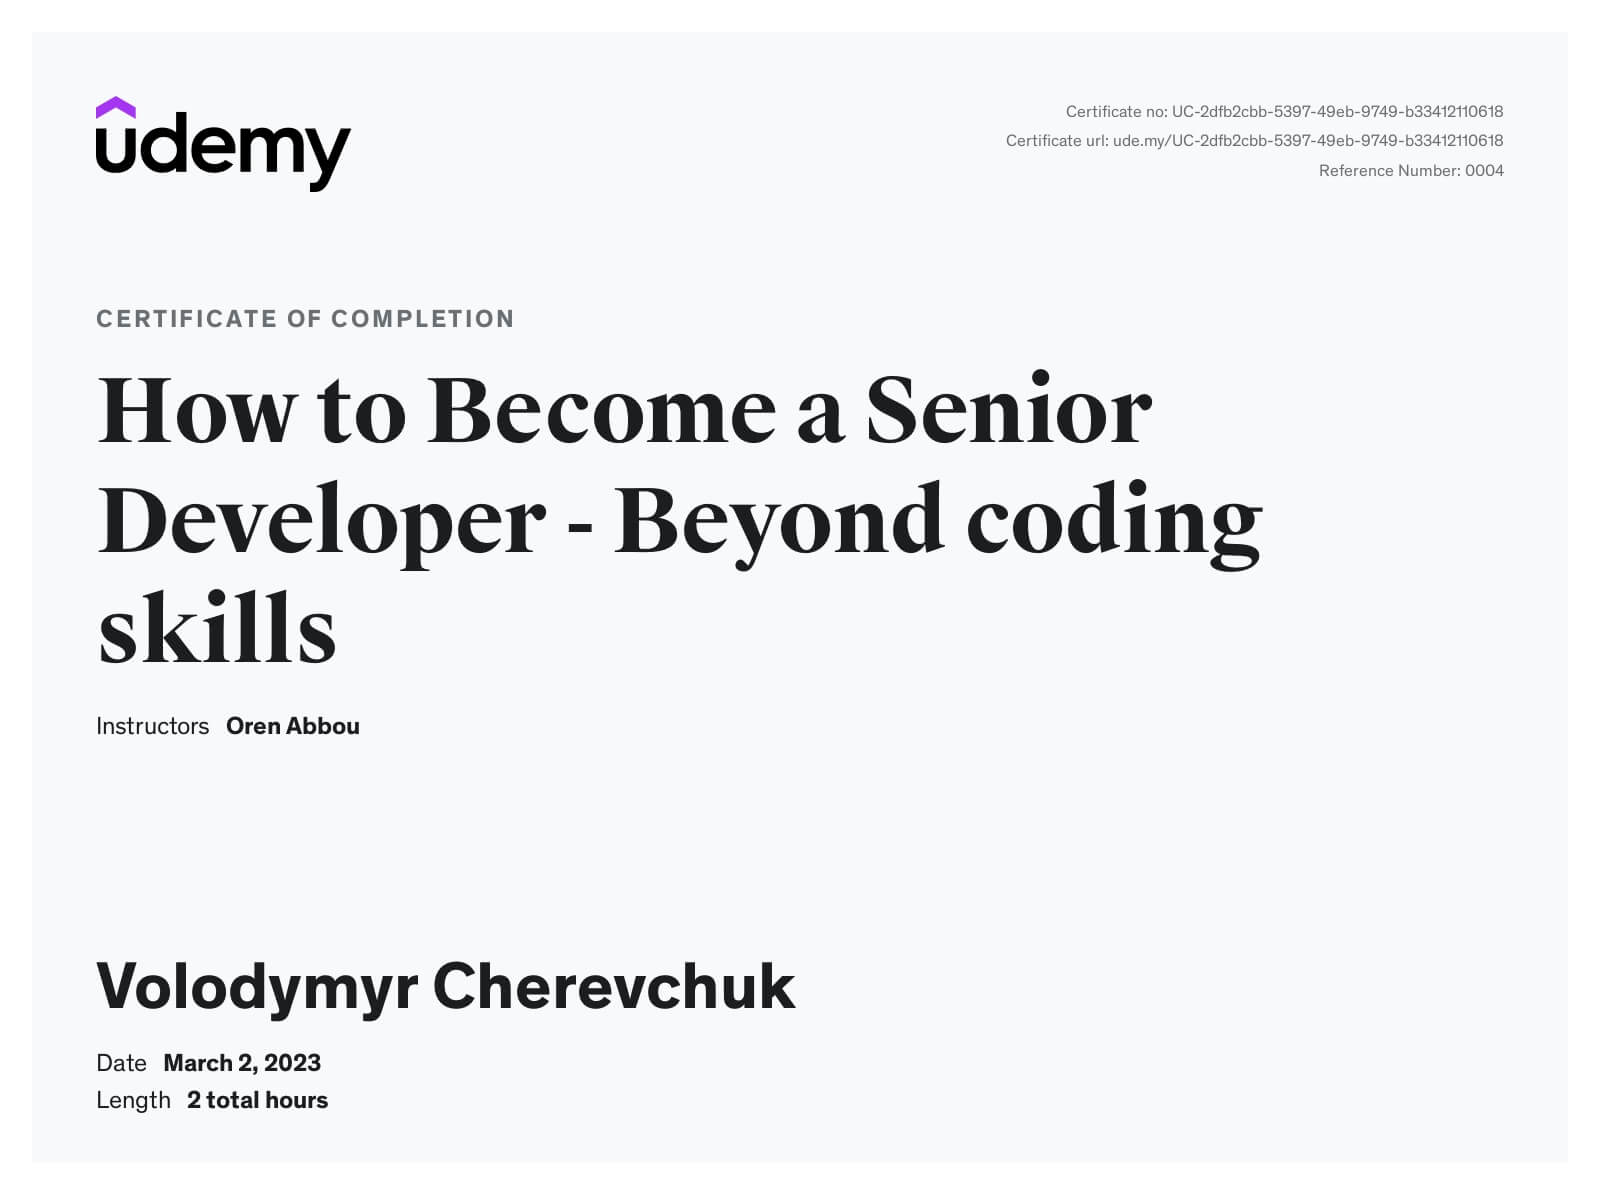 How to Become a Senior Developer - Beyond coding skills